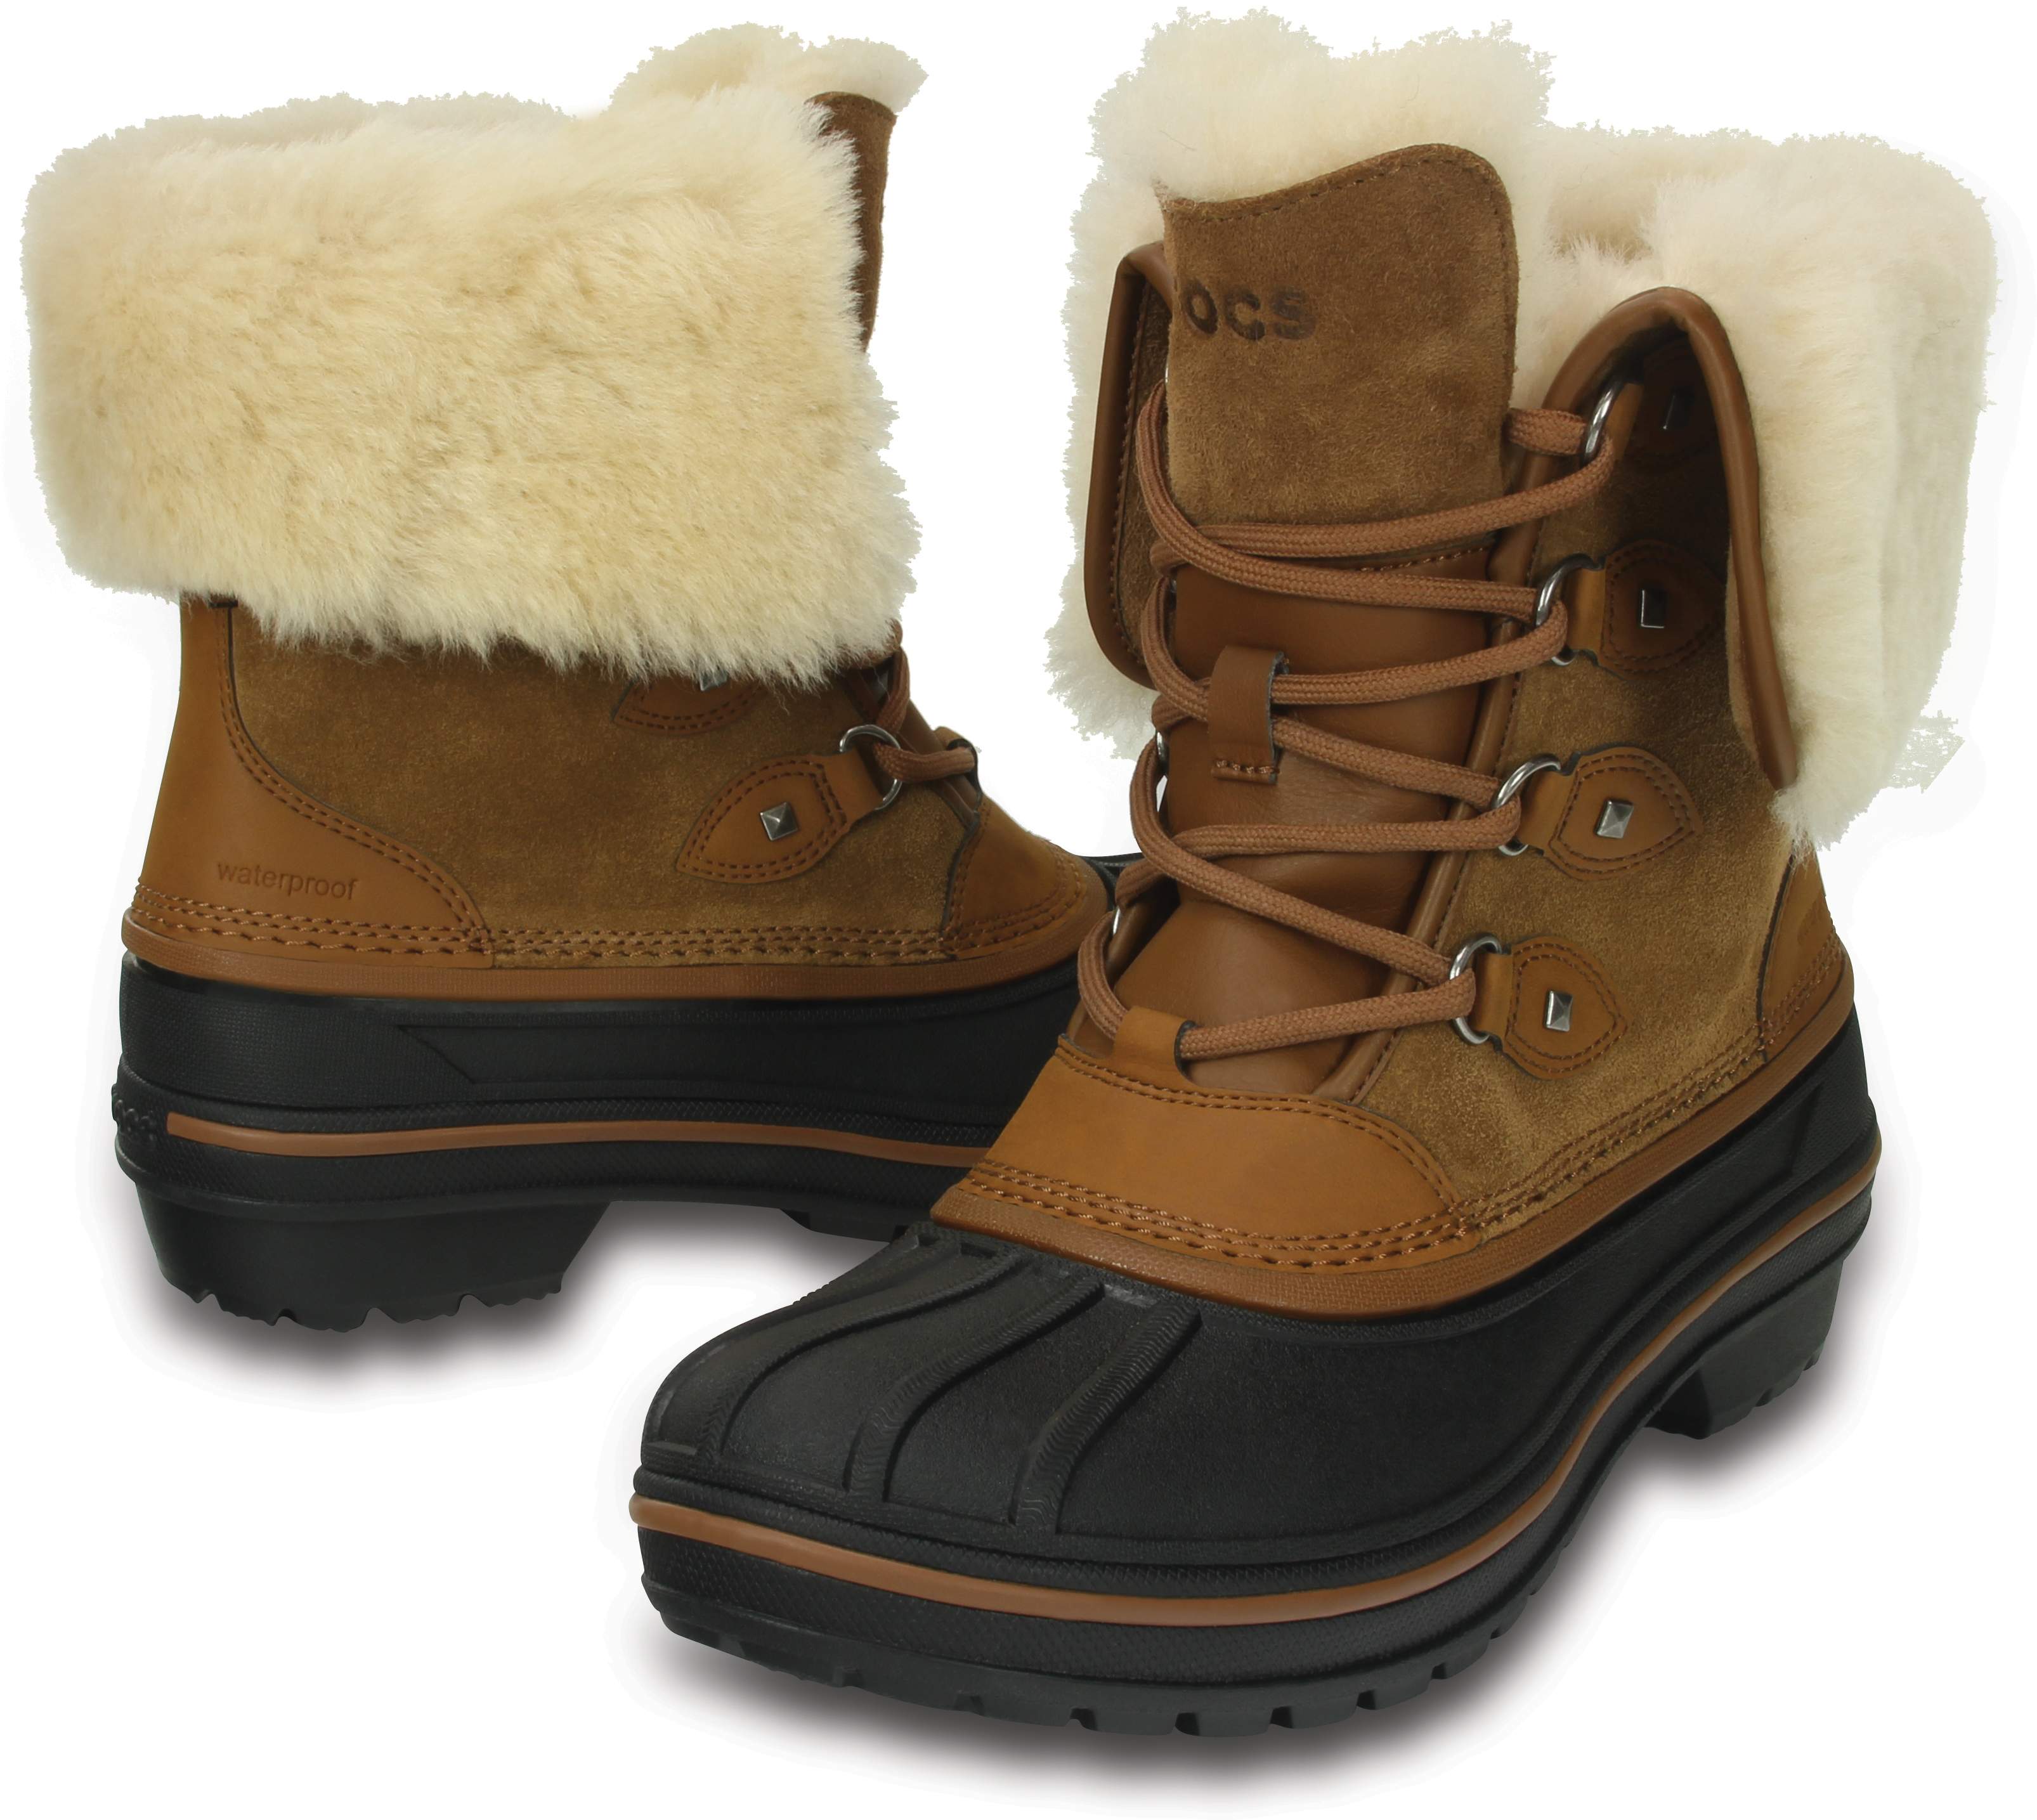 crocs men's winter boots